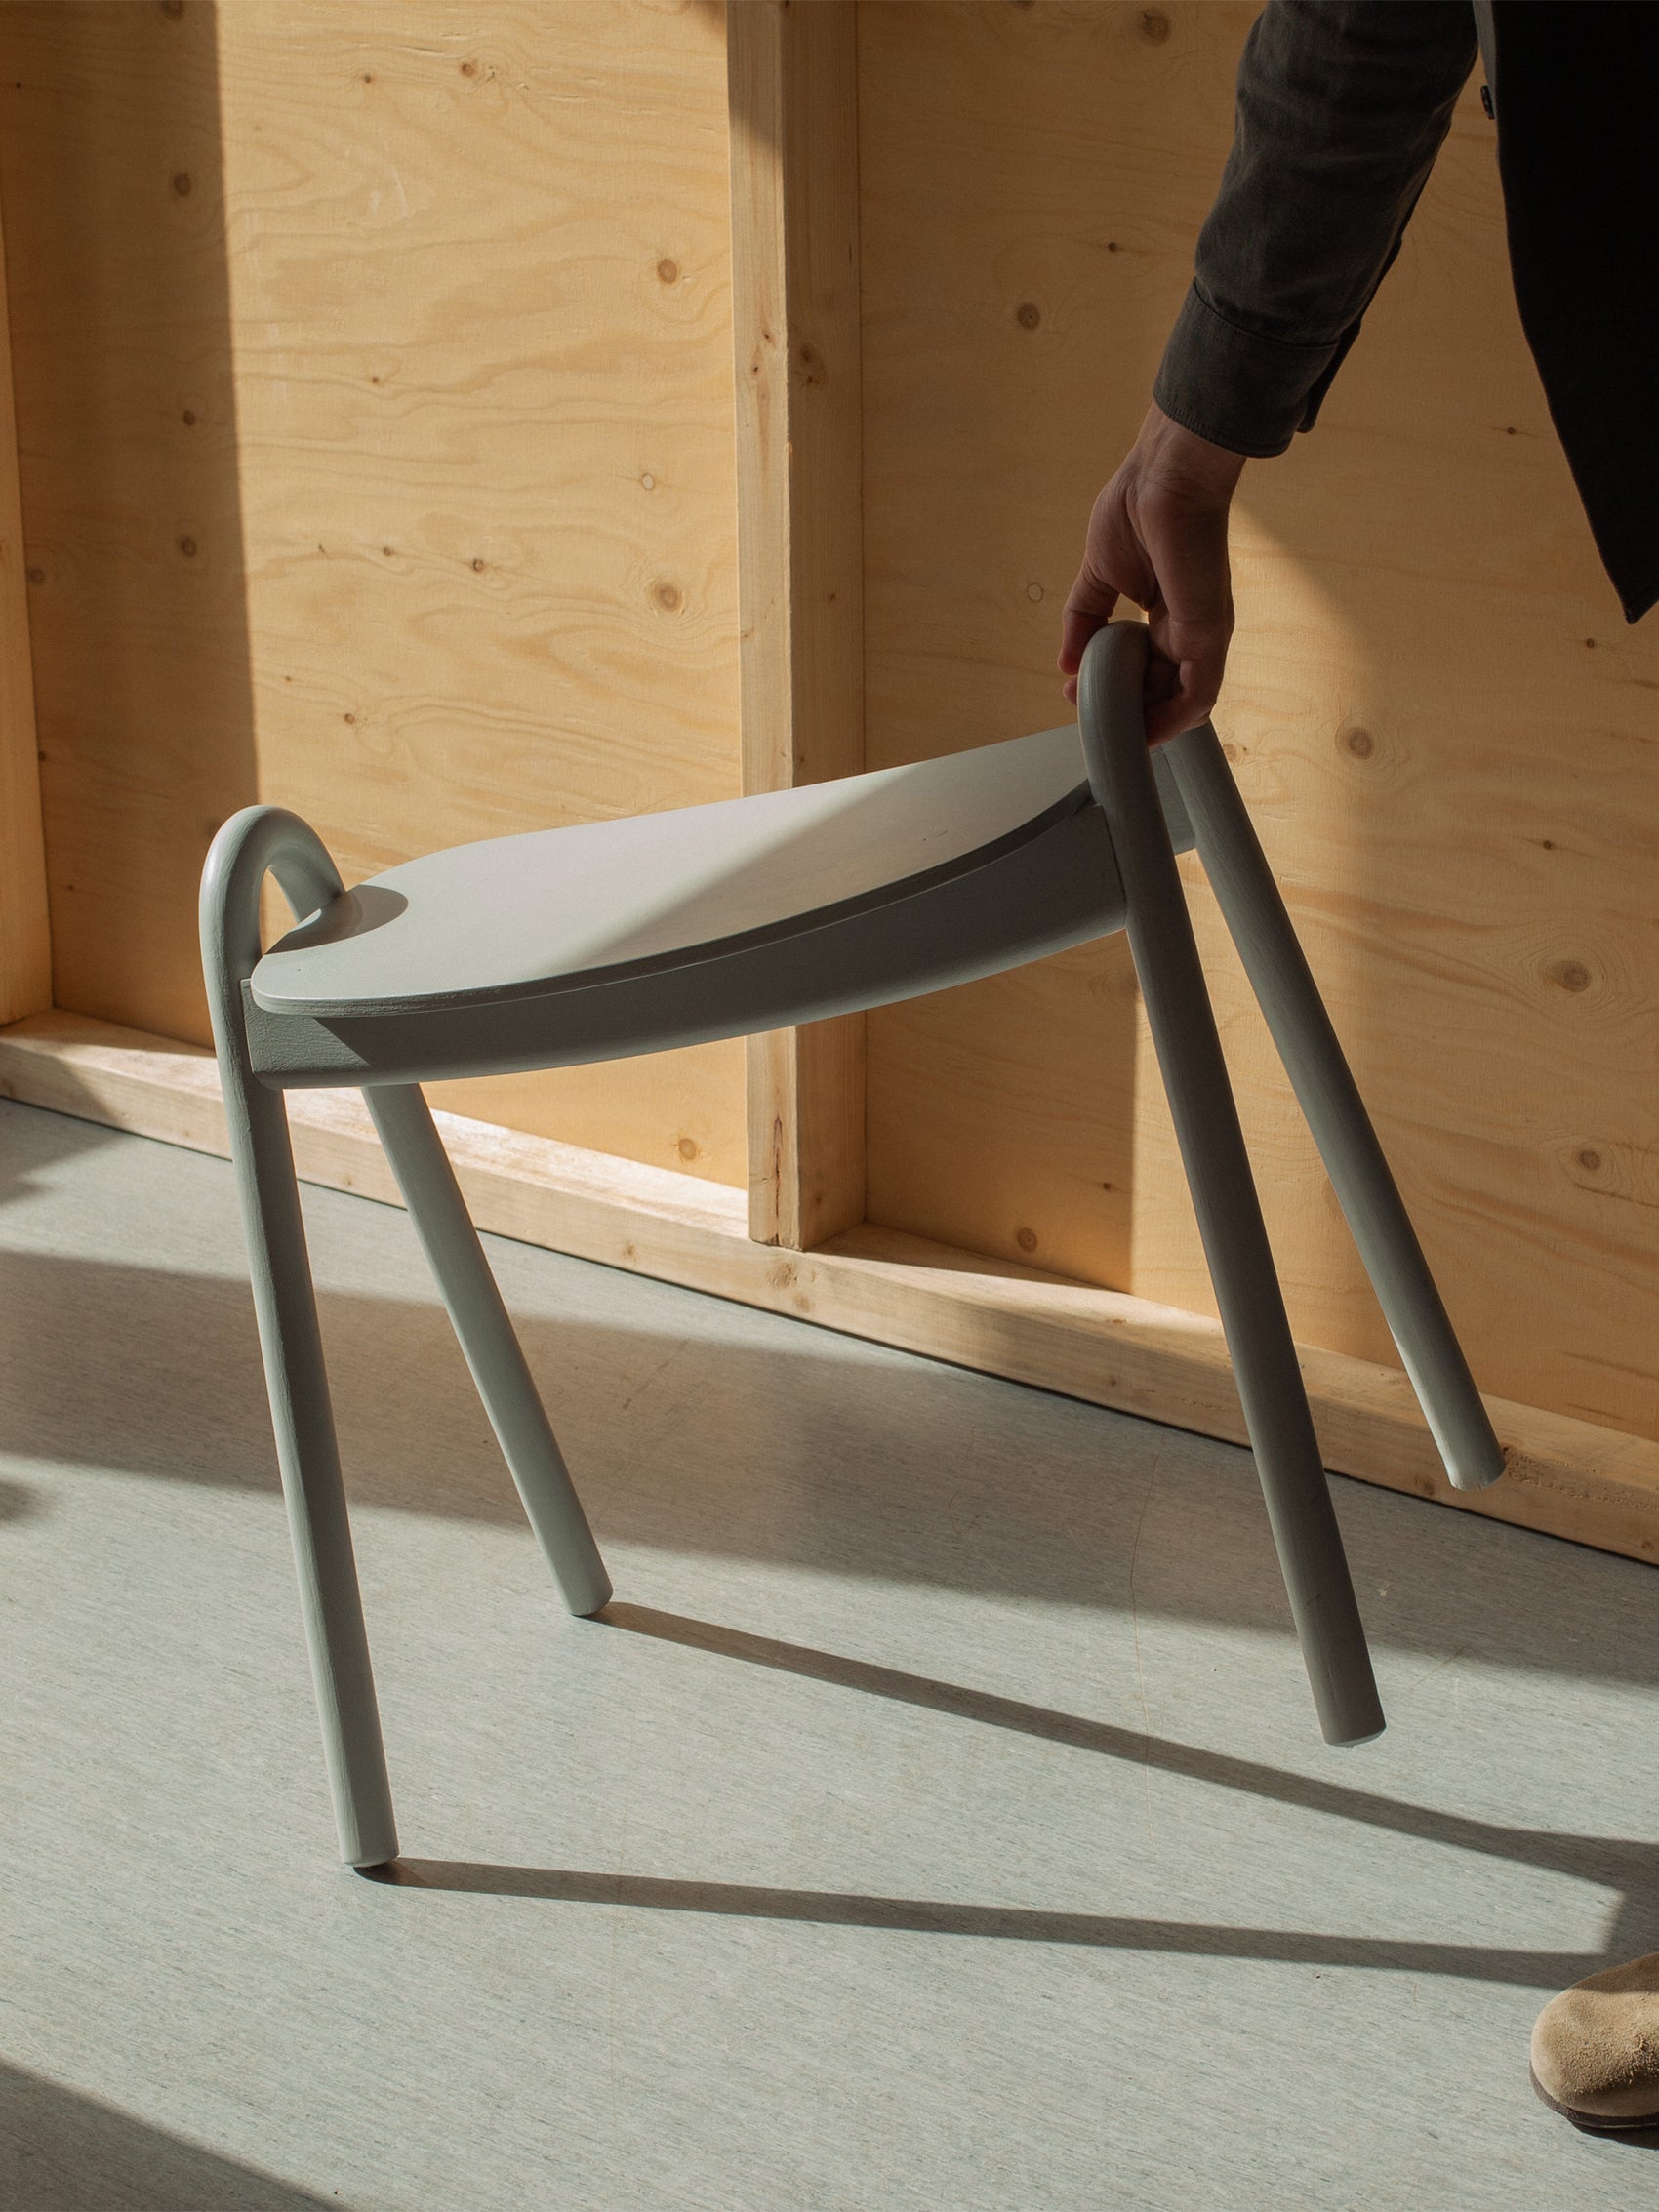 Kanto stool, Light grey